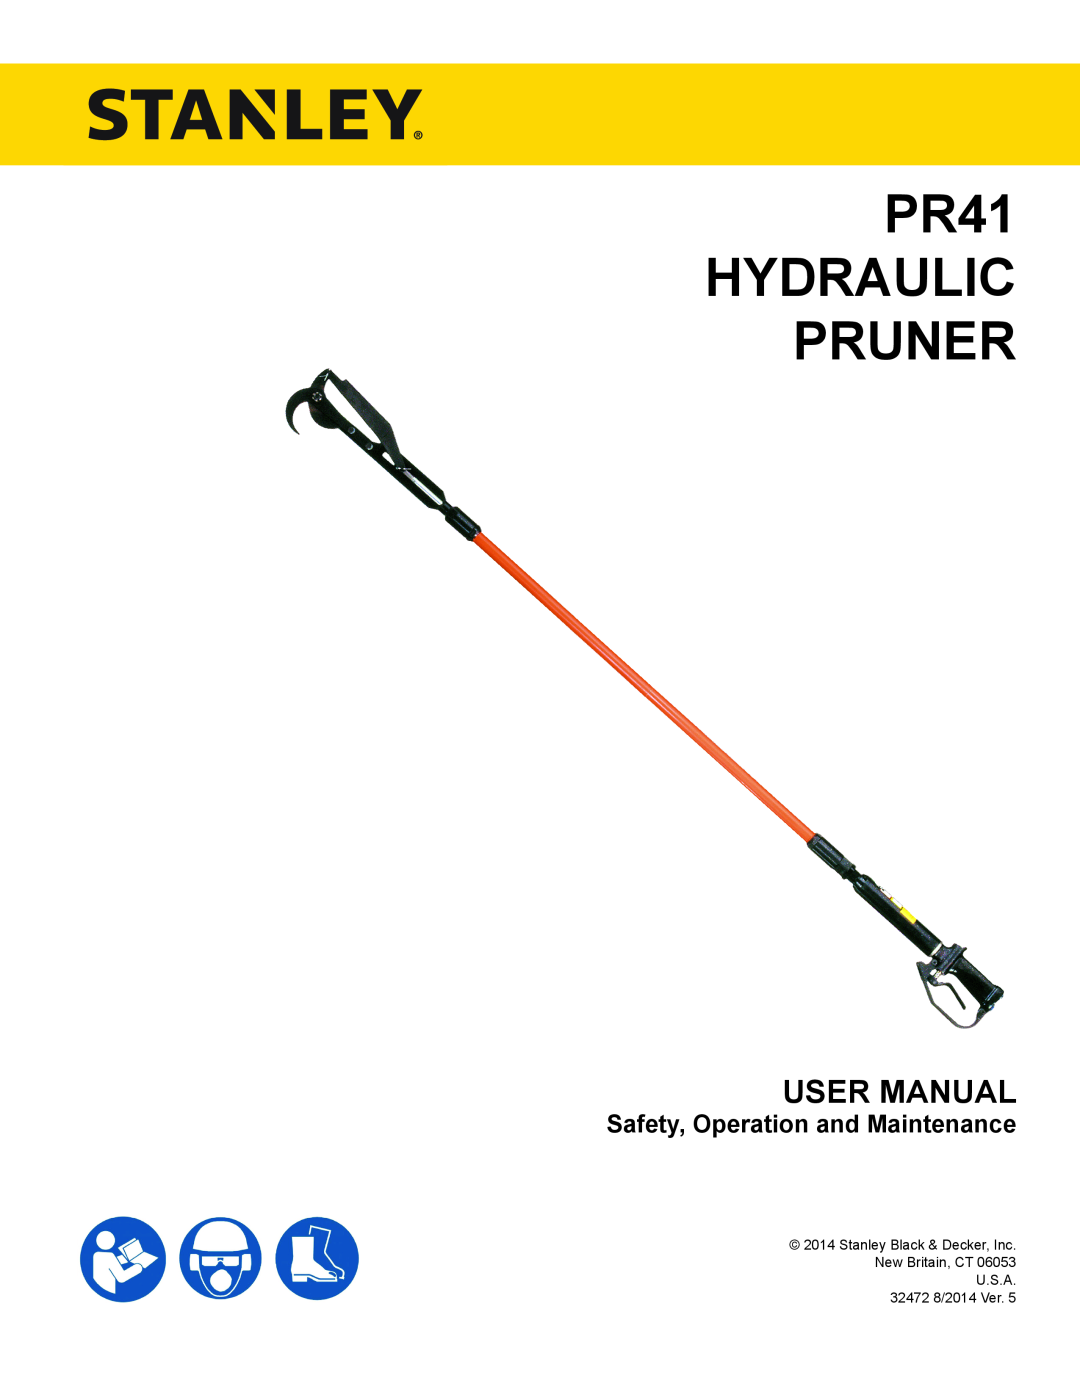 Stanley Black & Decker manual User Manual, Safety, Operation and Maintenance, PR41 HYDRAULIC PRUNER 